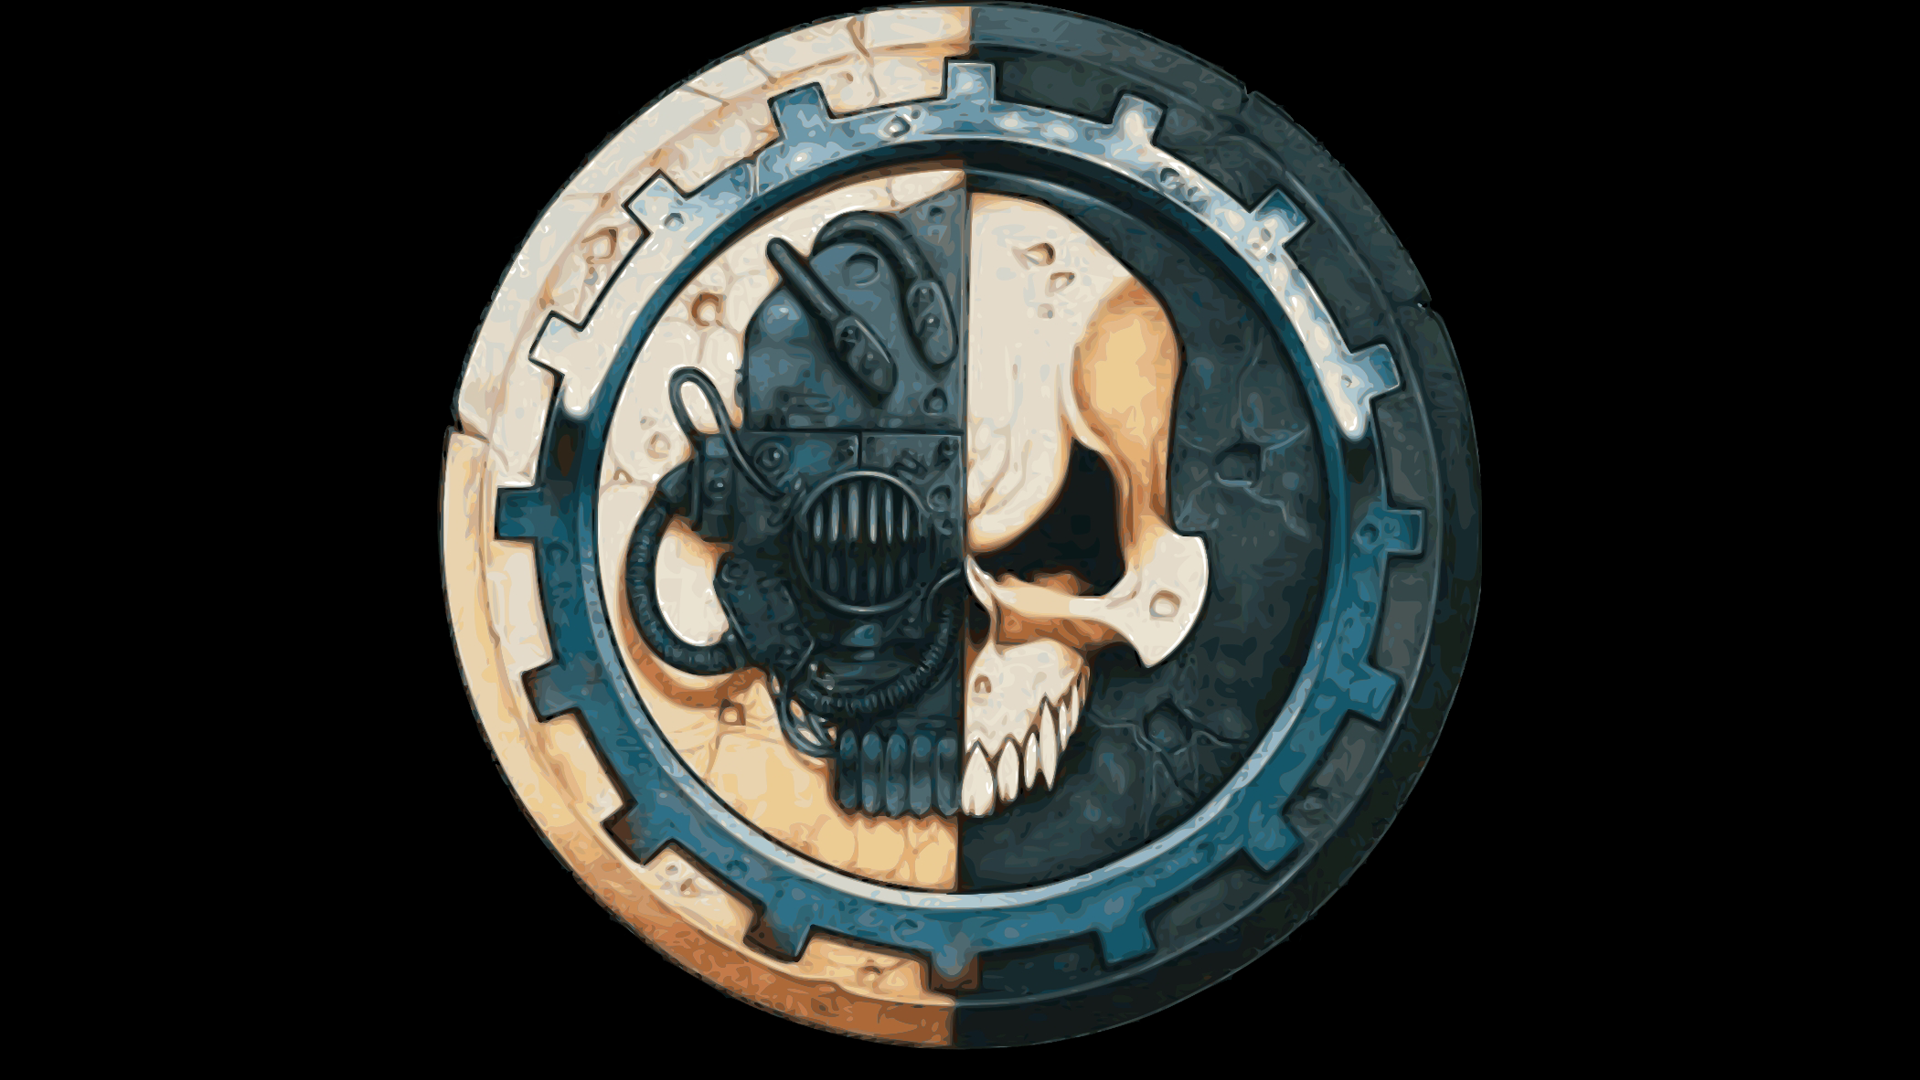 Mechanicus symbol on a Deus est Machina hd wallpaper (Warhammer 40k).